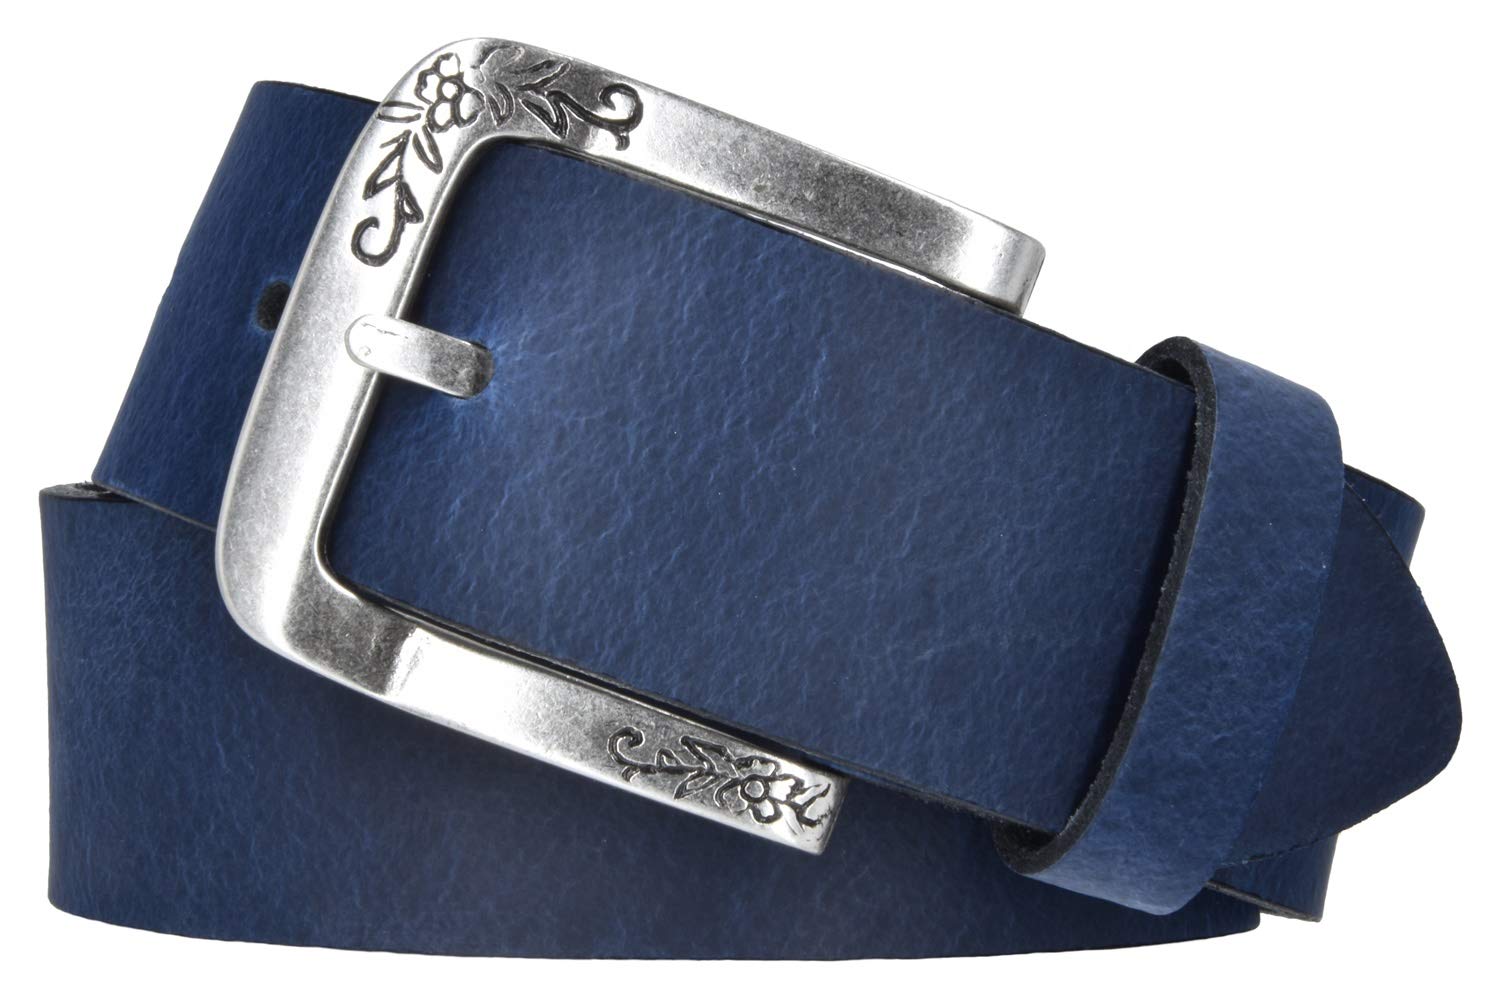 Mytem-Gear Damen Gürtel Leder Belt Ledergürtel Rindleder 40 mm Damengürtel kürzbar (110 cm, Blau)